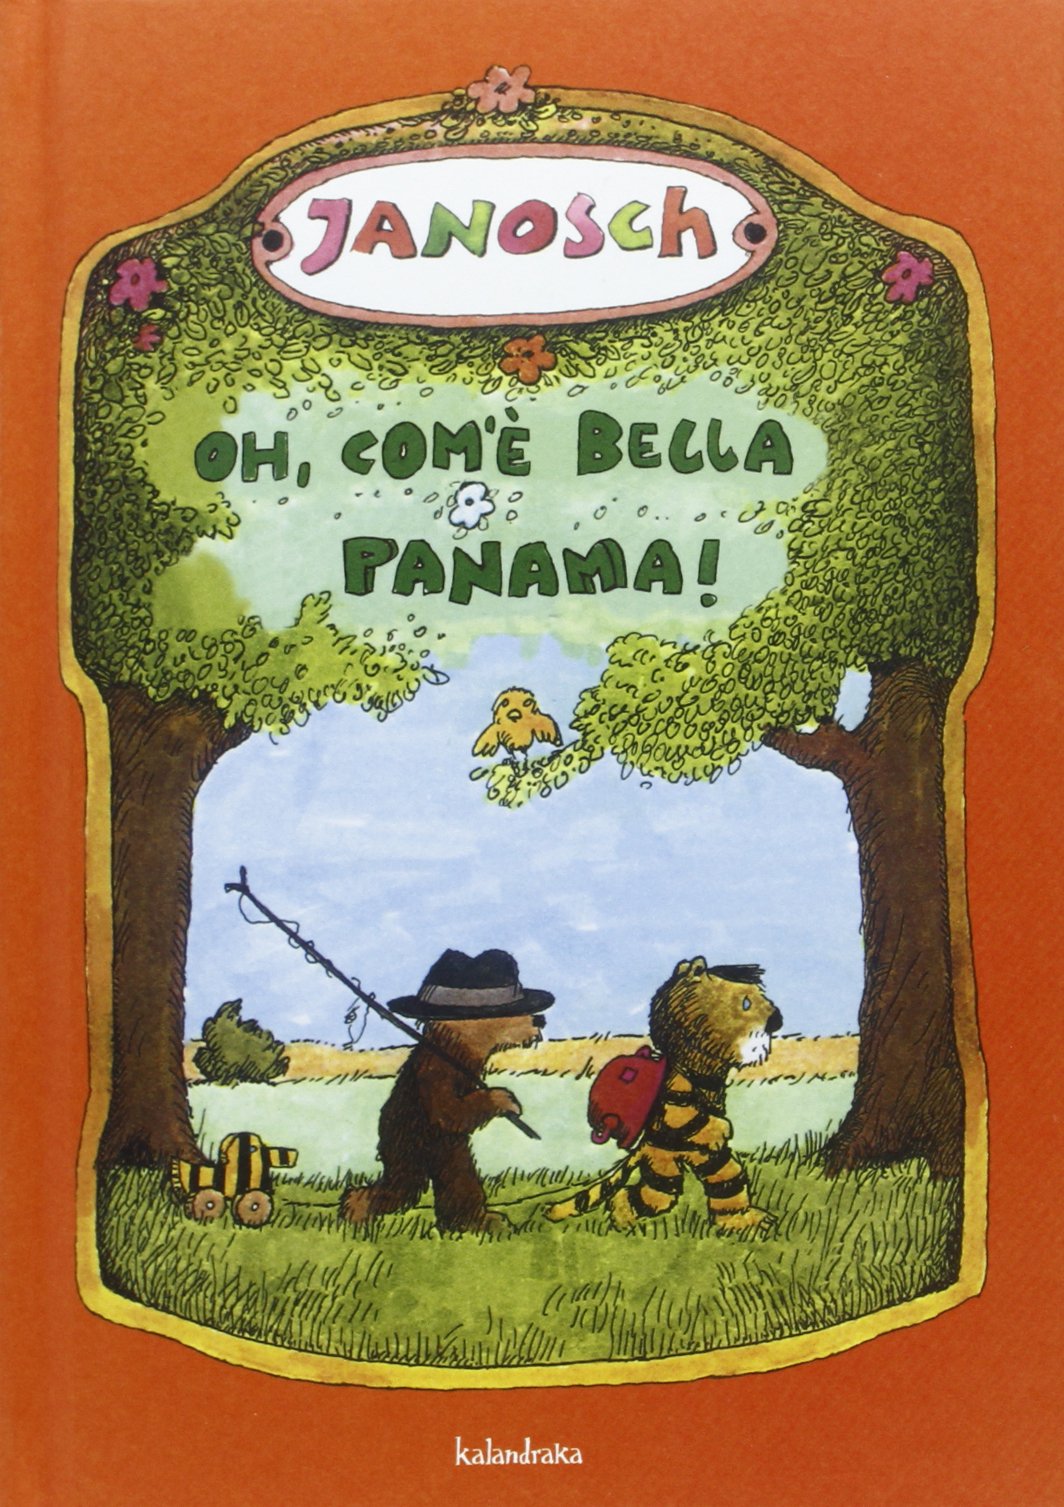 Oh, com'è bella Panama! - Libreria per bambini Radice Labirinto - Carpi,  Modena